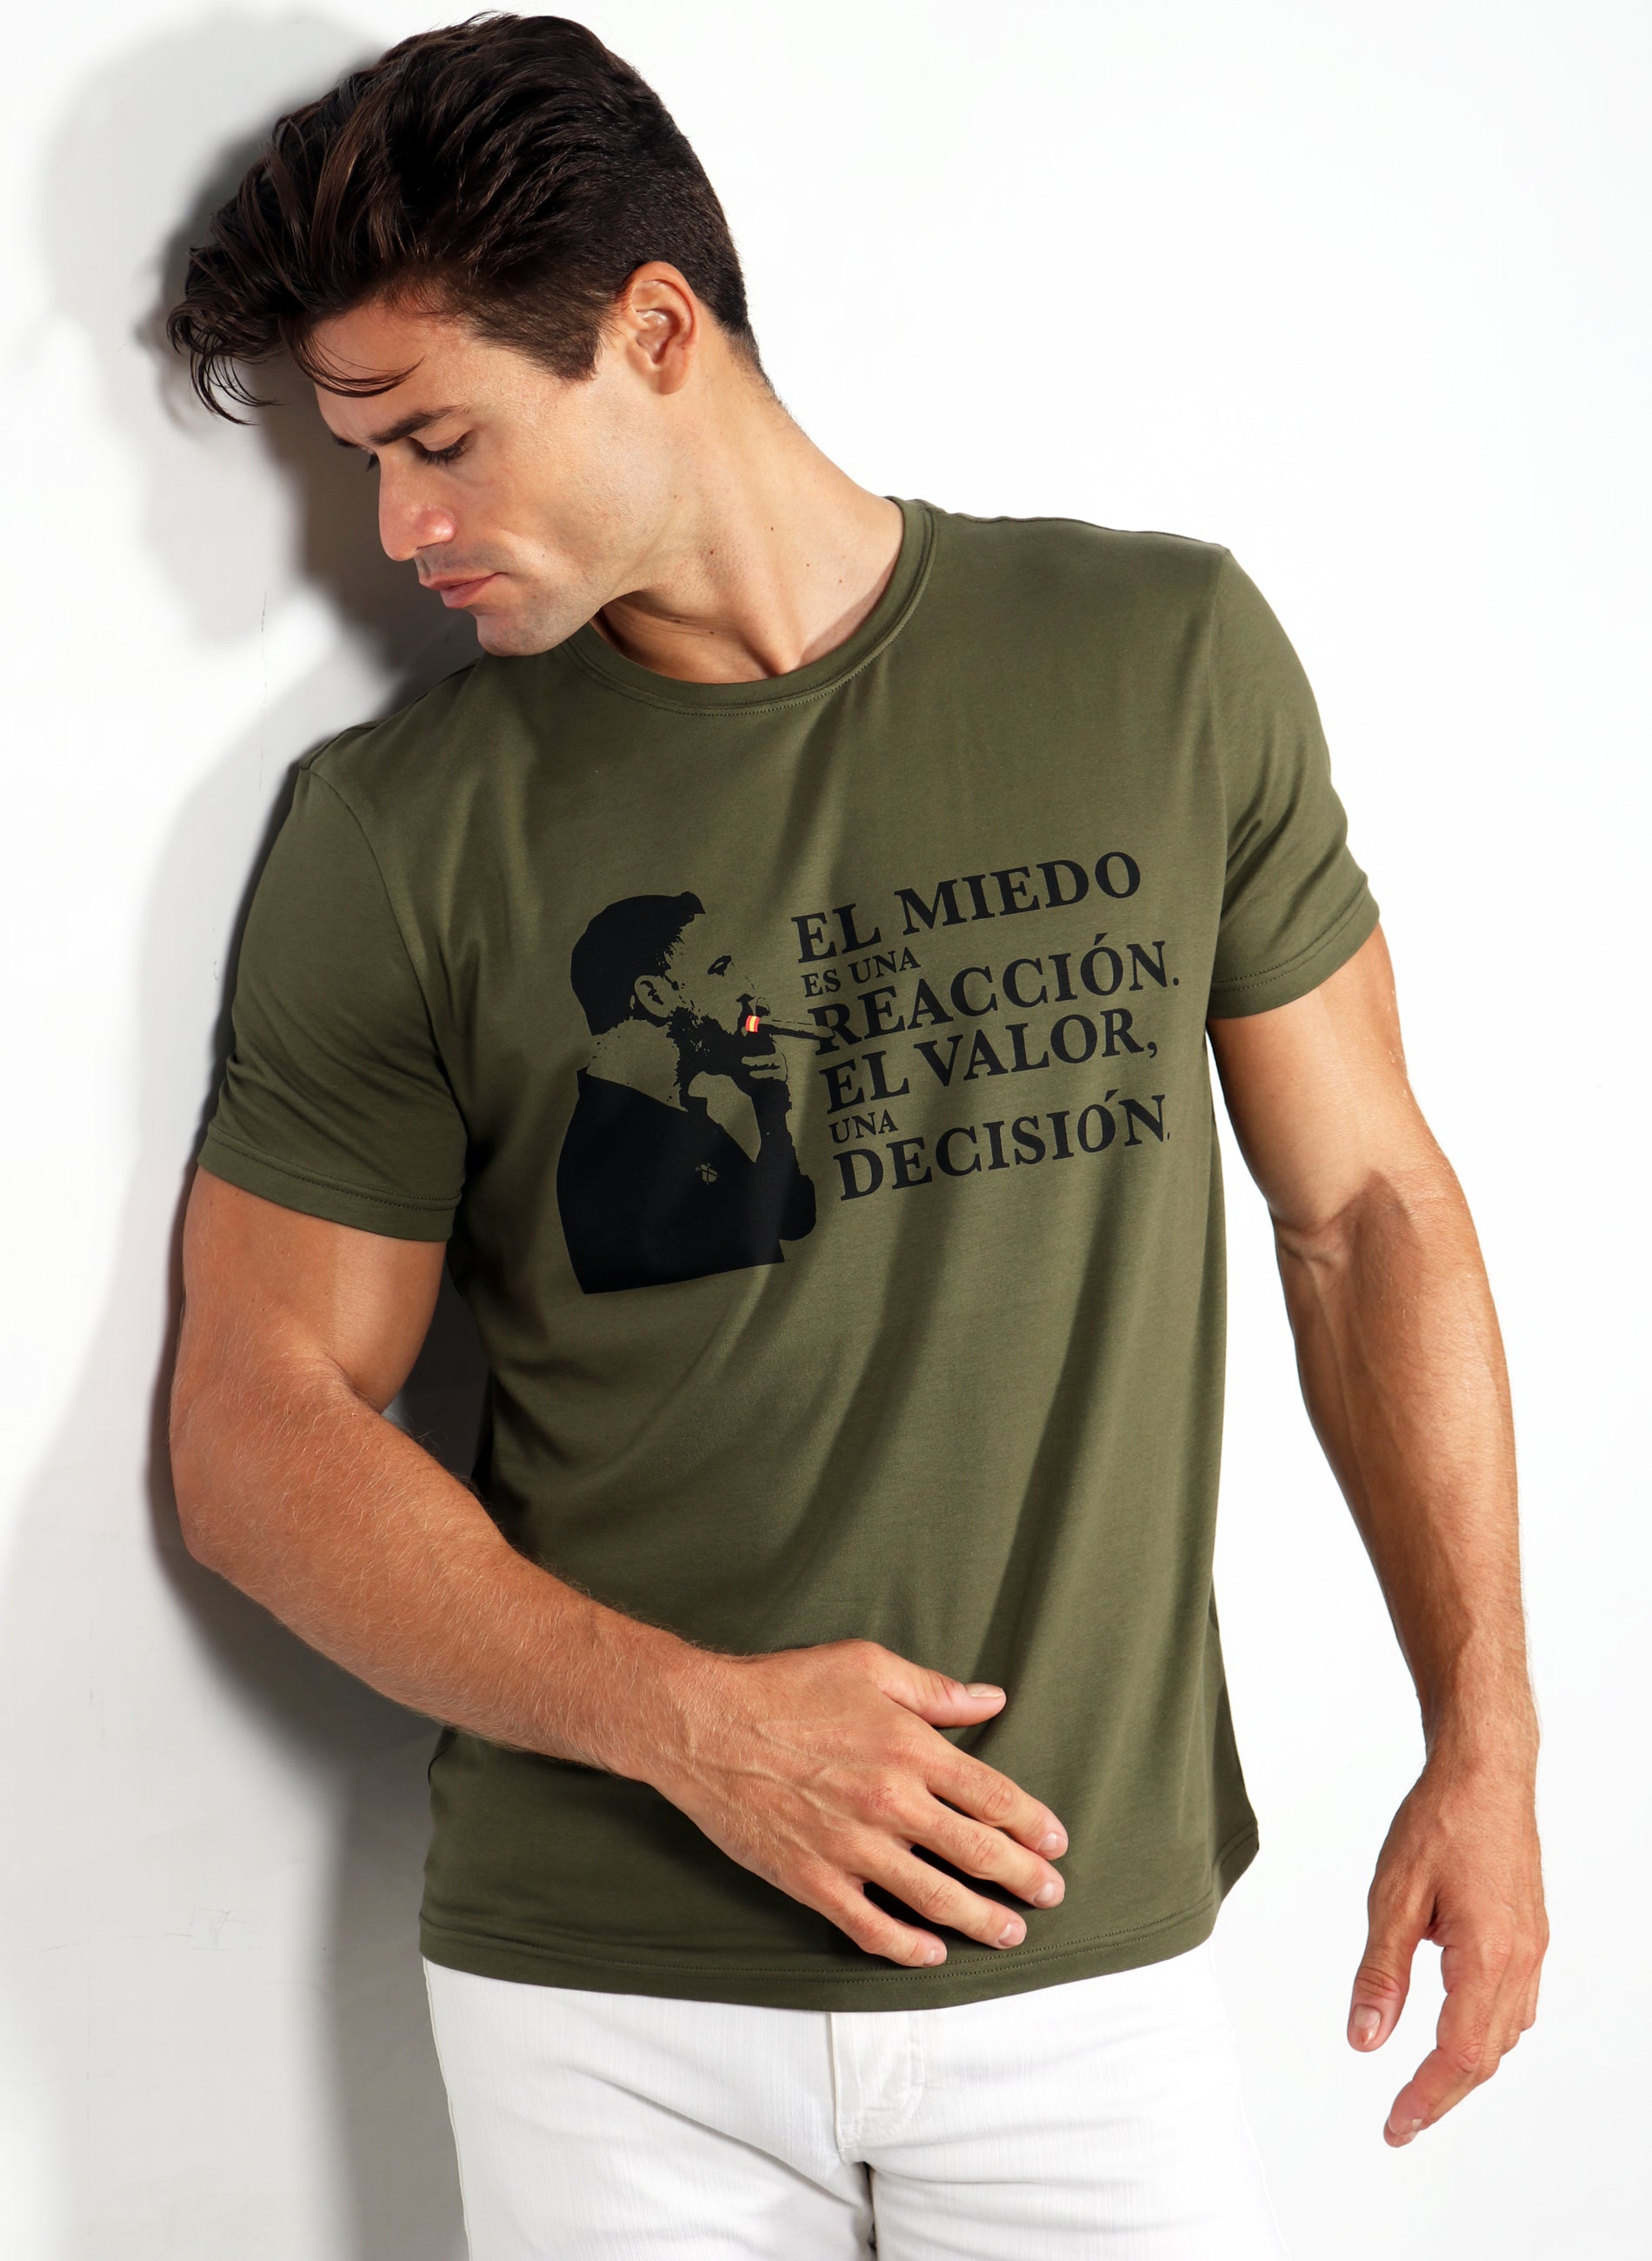 Khakigrünes Herren-T-Shirt Santiago Abascal